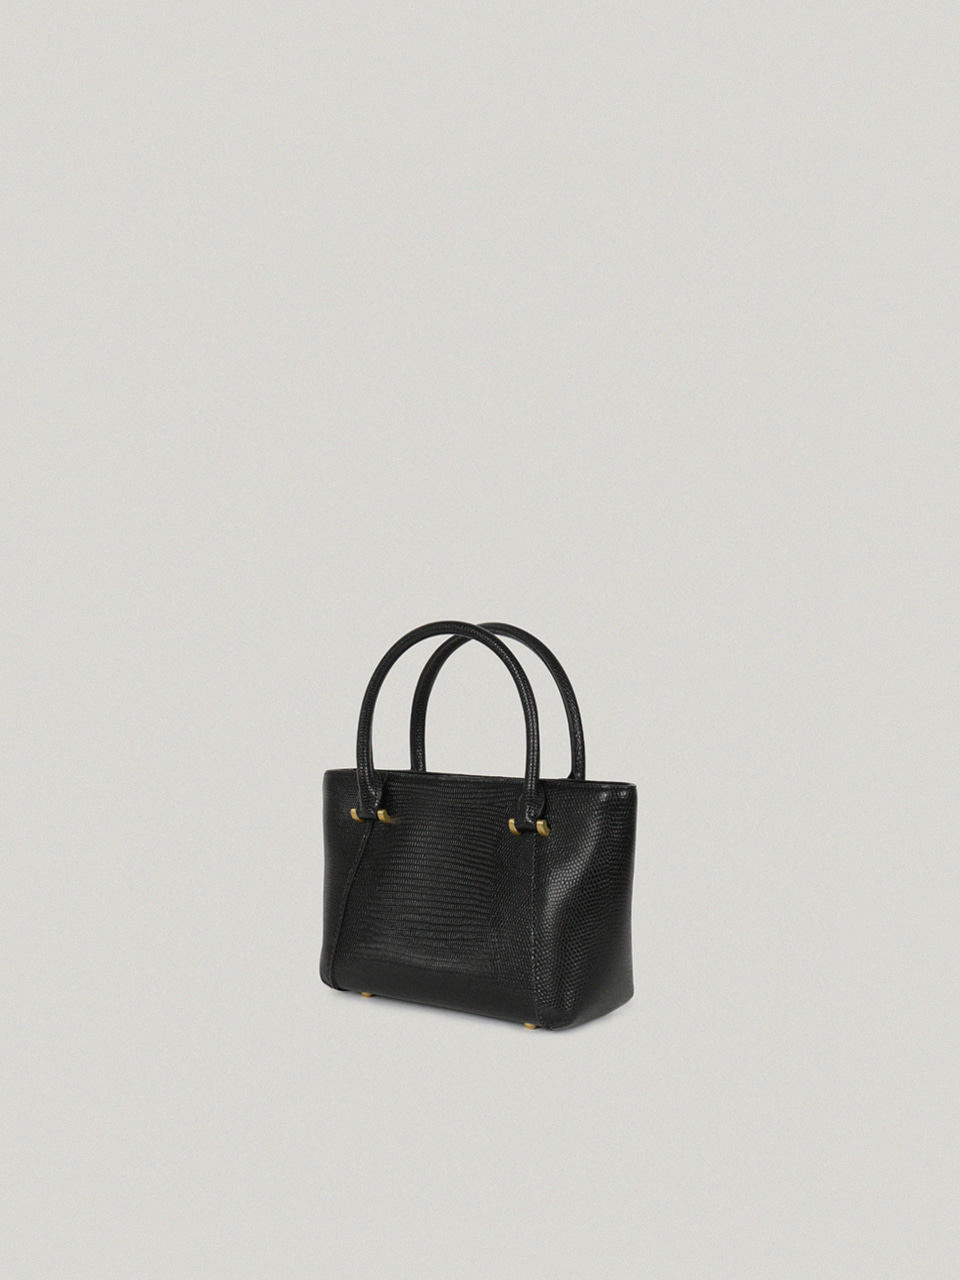 Gouter Bag / Pattern Black